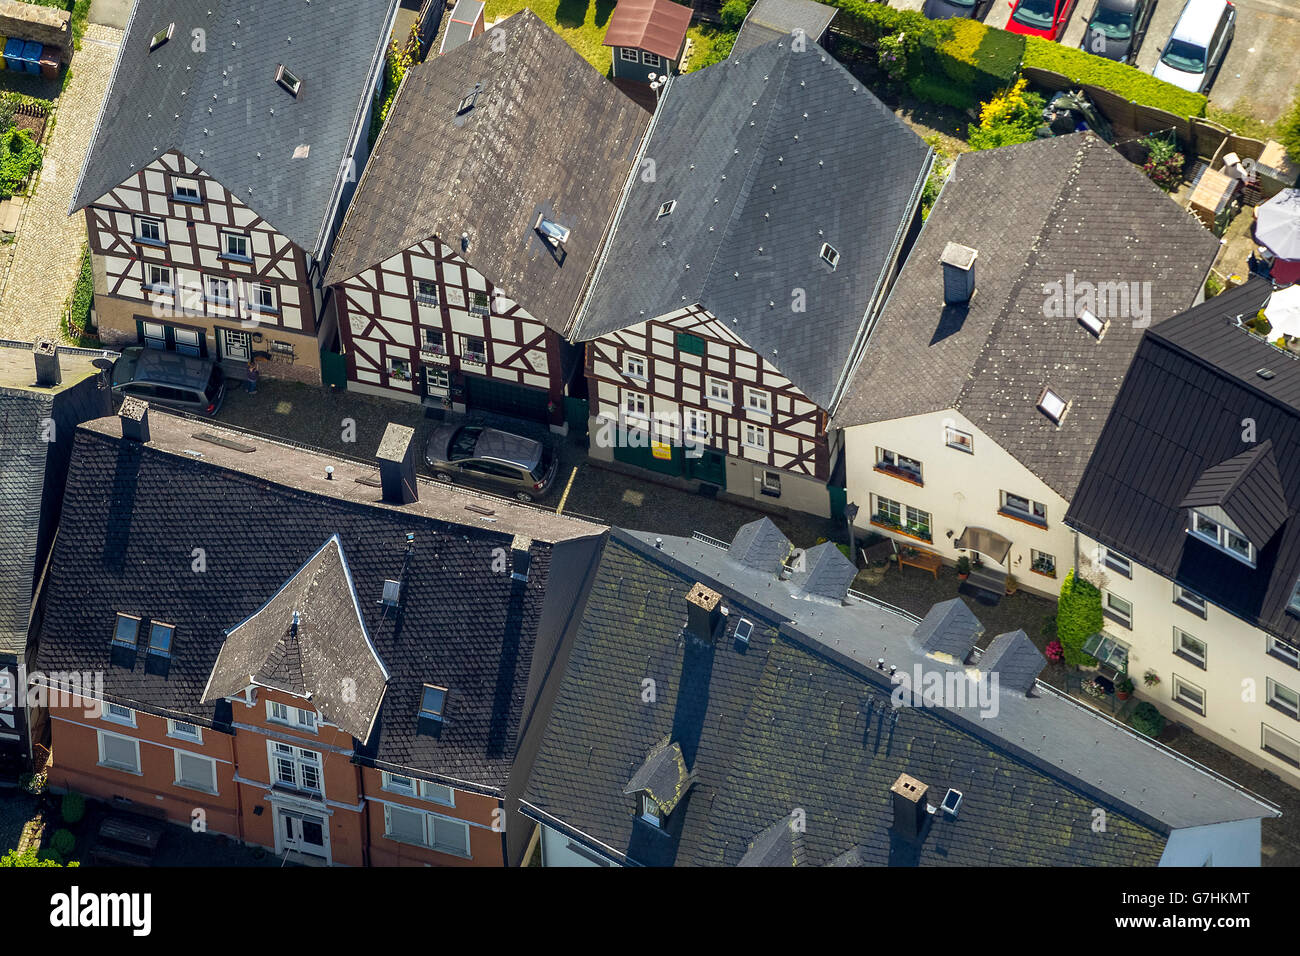 Aerial view, half-timbered houses, old town, aerial view, Bad Laasphe, Siegen-Wittgenstein, Nordrhein-Westfalen, Germany, Europe Stock Photo